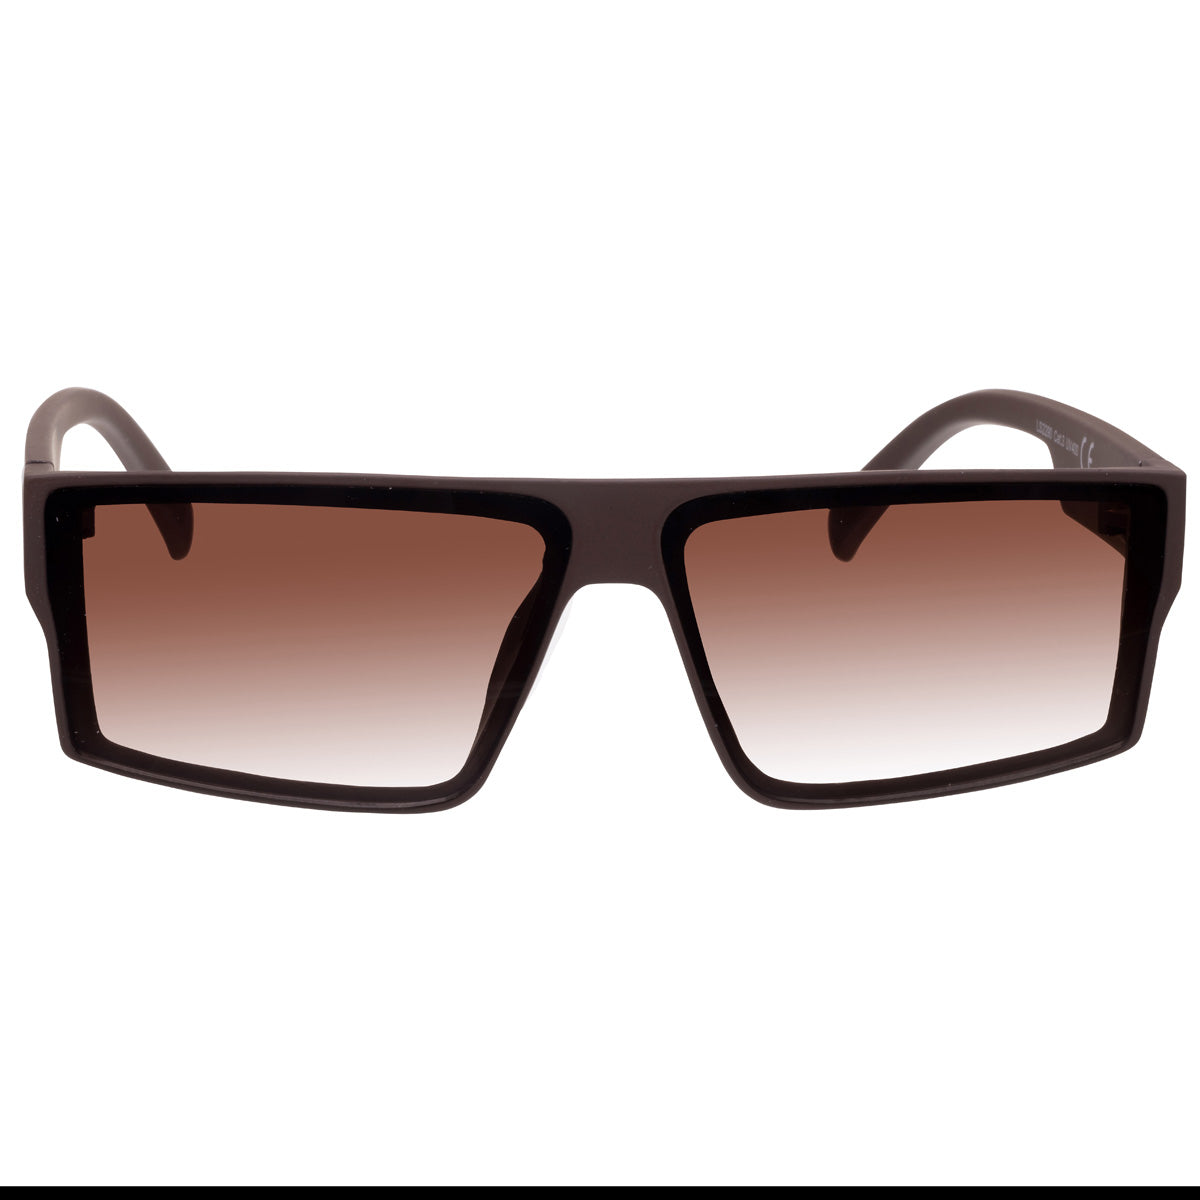 Angular low flat top sunglasses